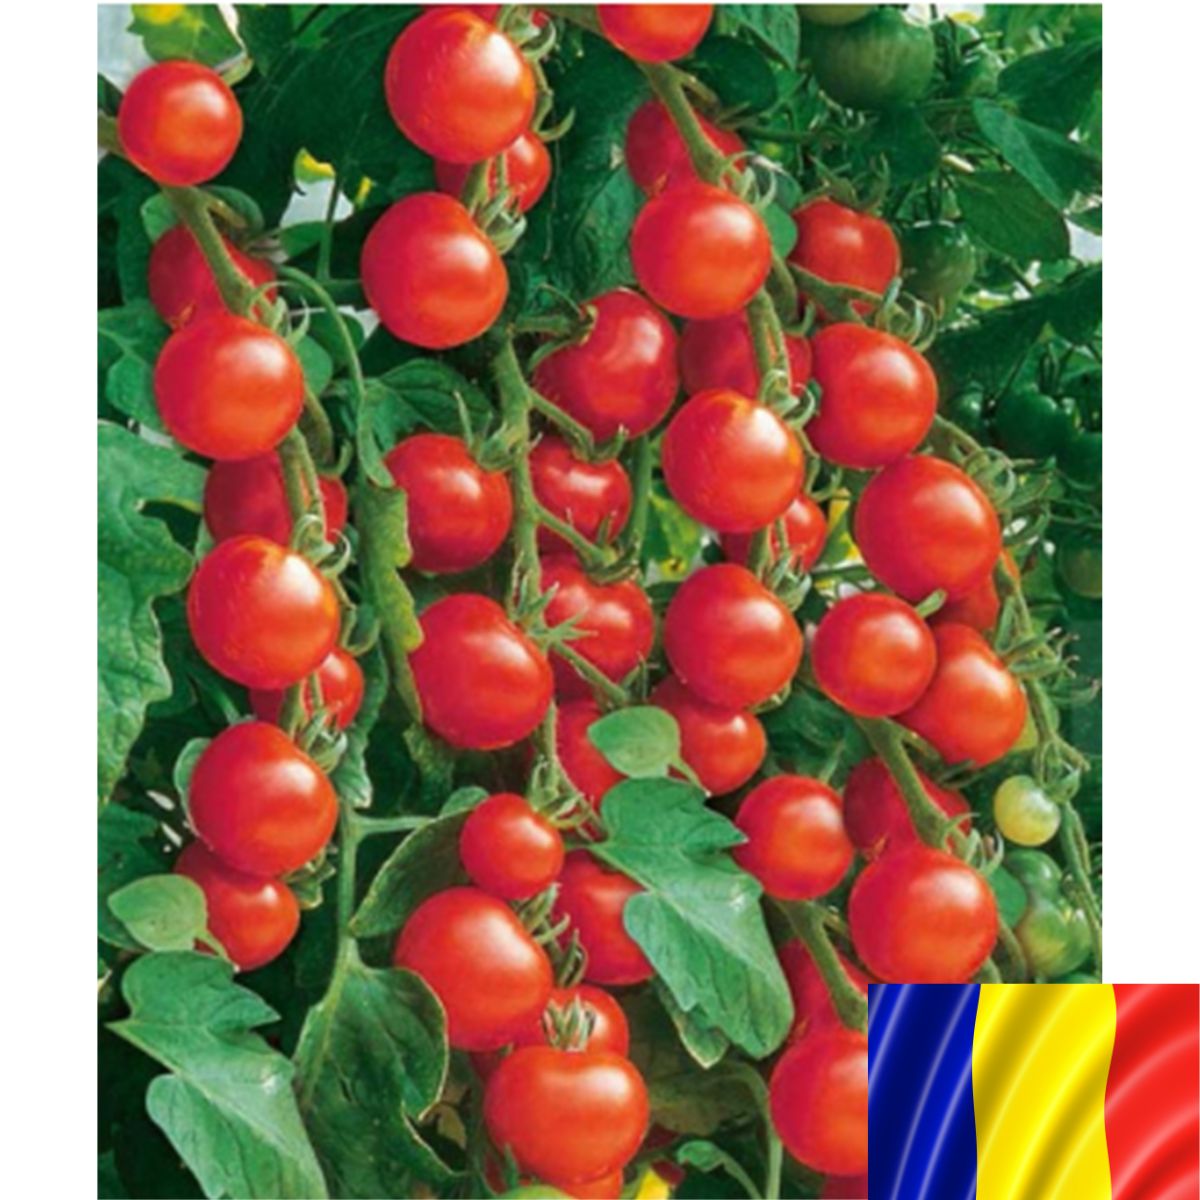 Seminte de legume HOBBY - Seminte romanesti de tomate cherry EMA DE BUZAU, 2gr, SCDL Buzau, hectarul.ro